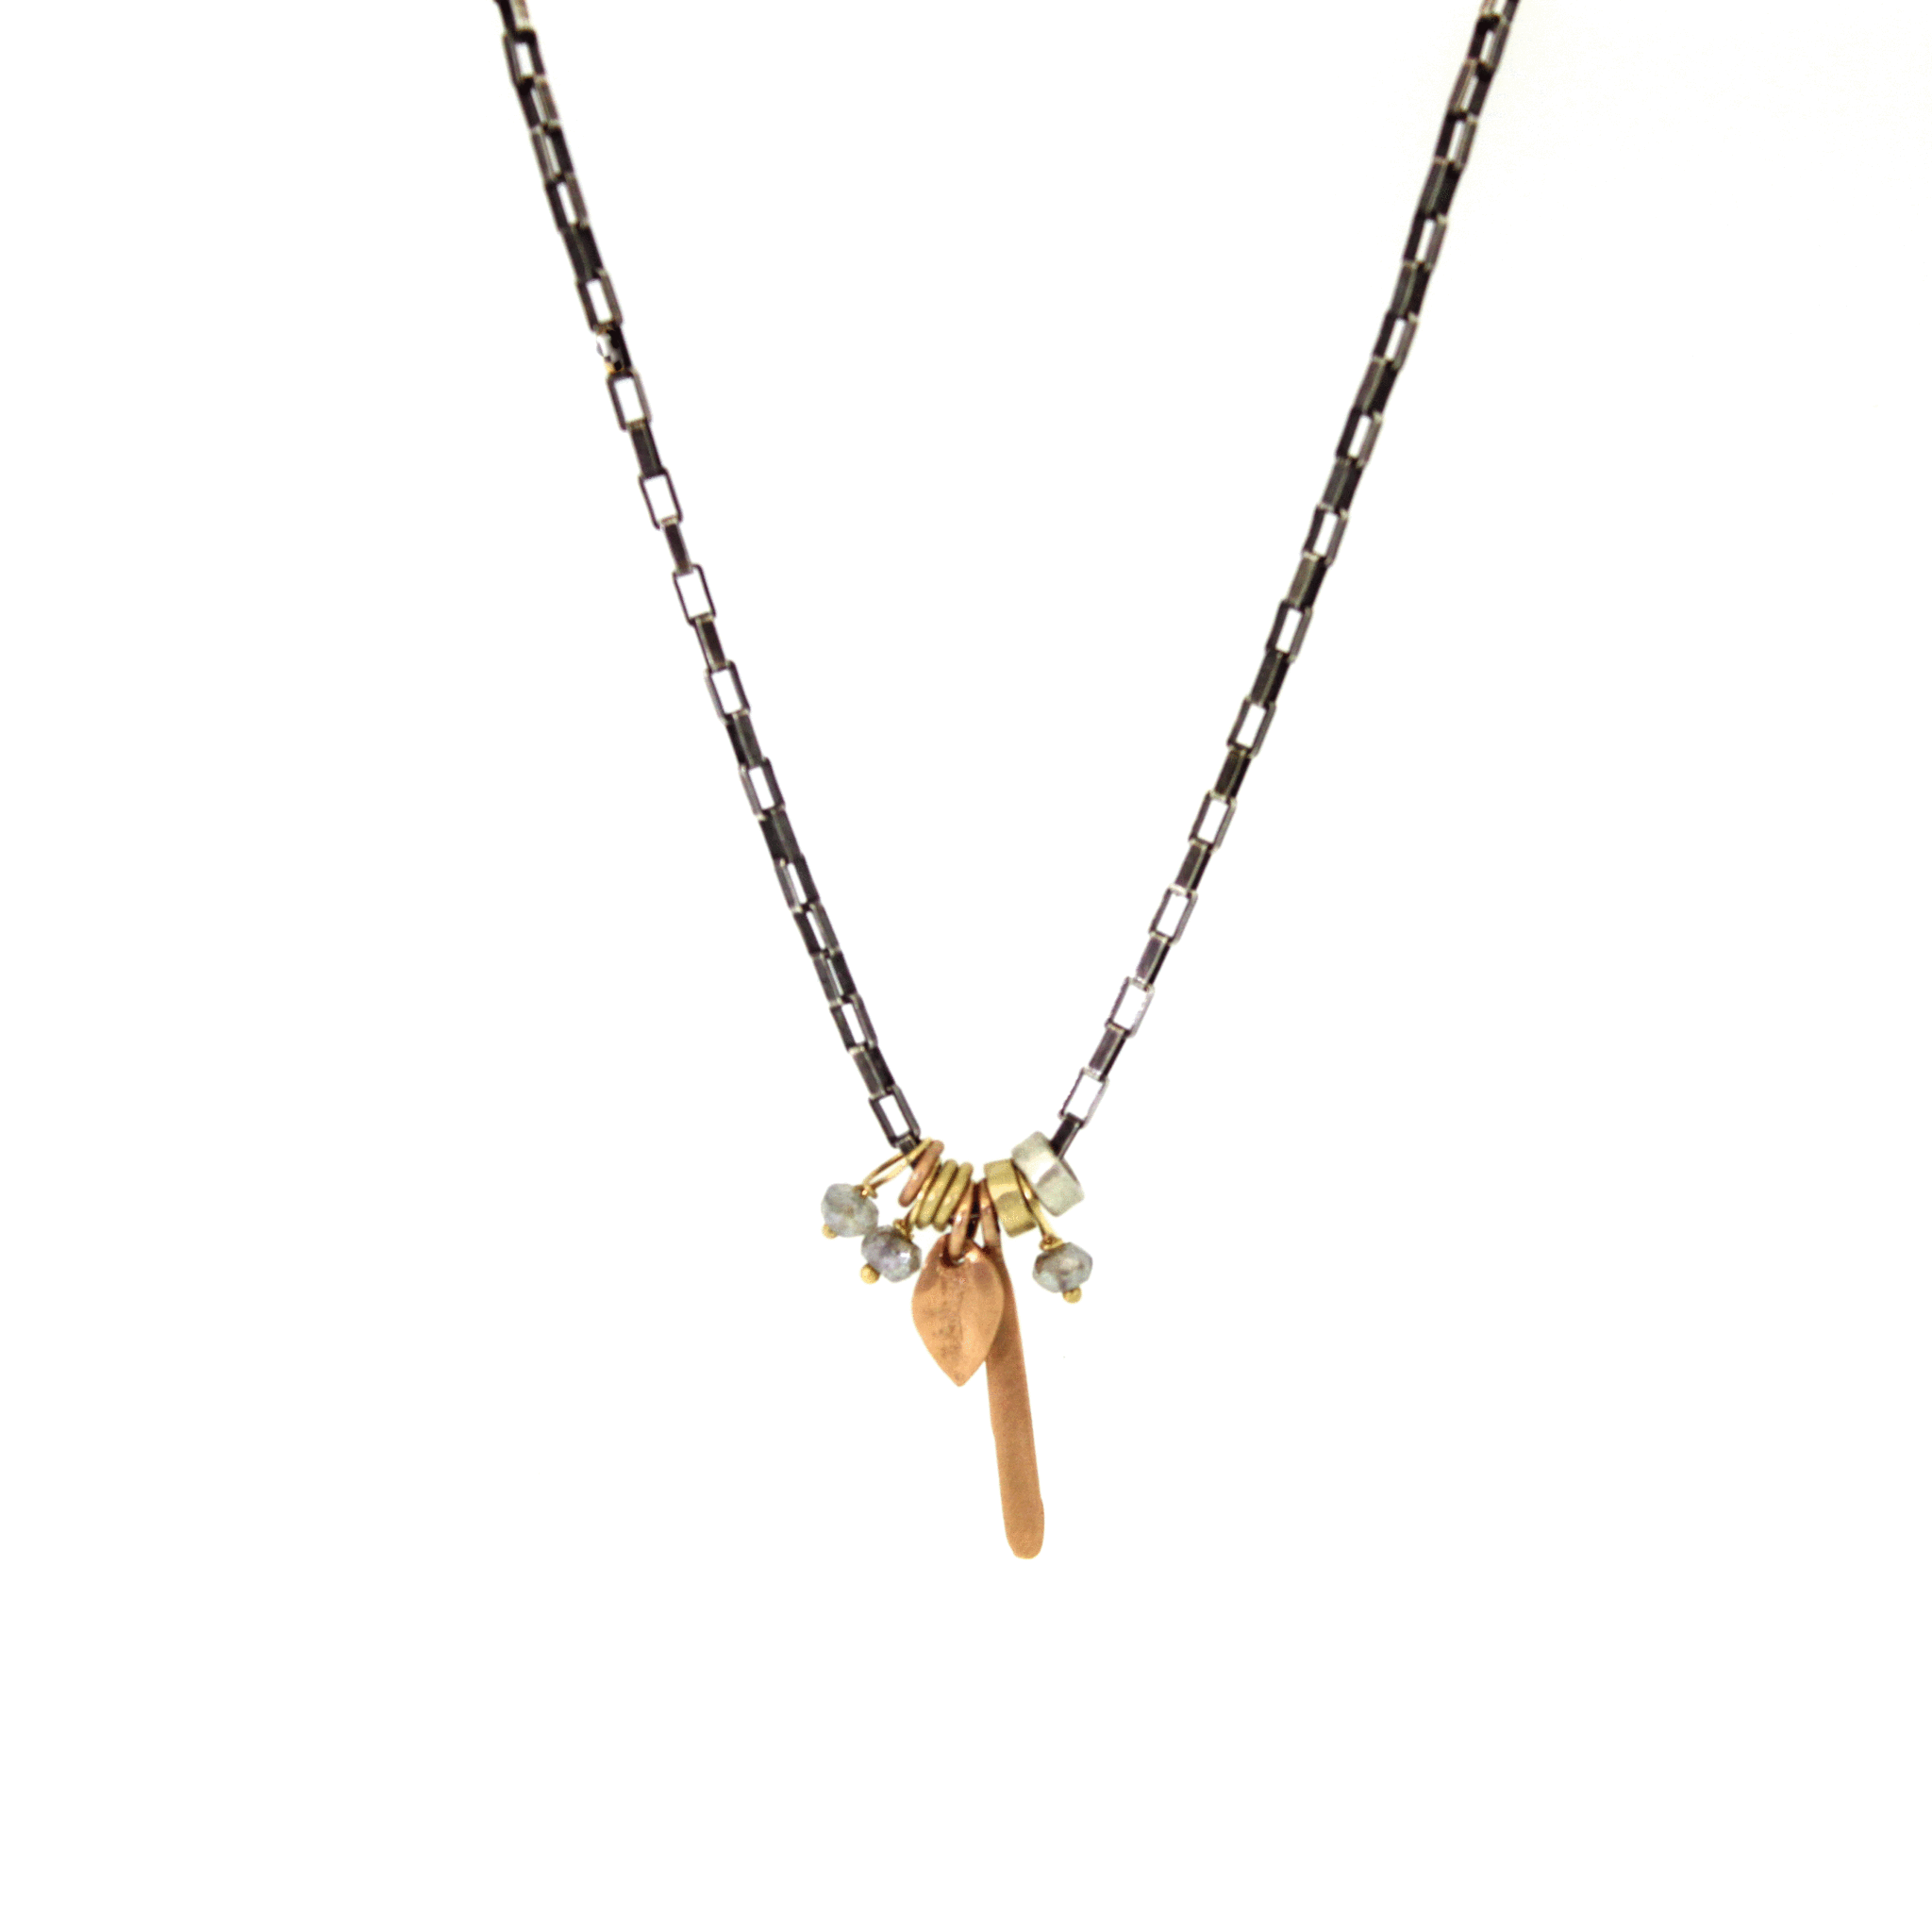 Rebecca Lankford Silver & Gold Charm Necklace - Rebecca Lankford Designs